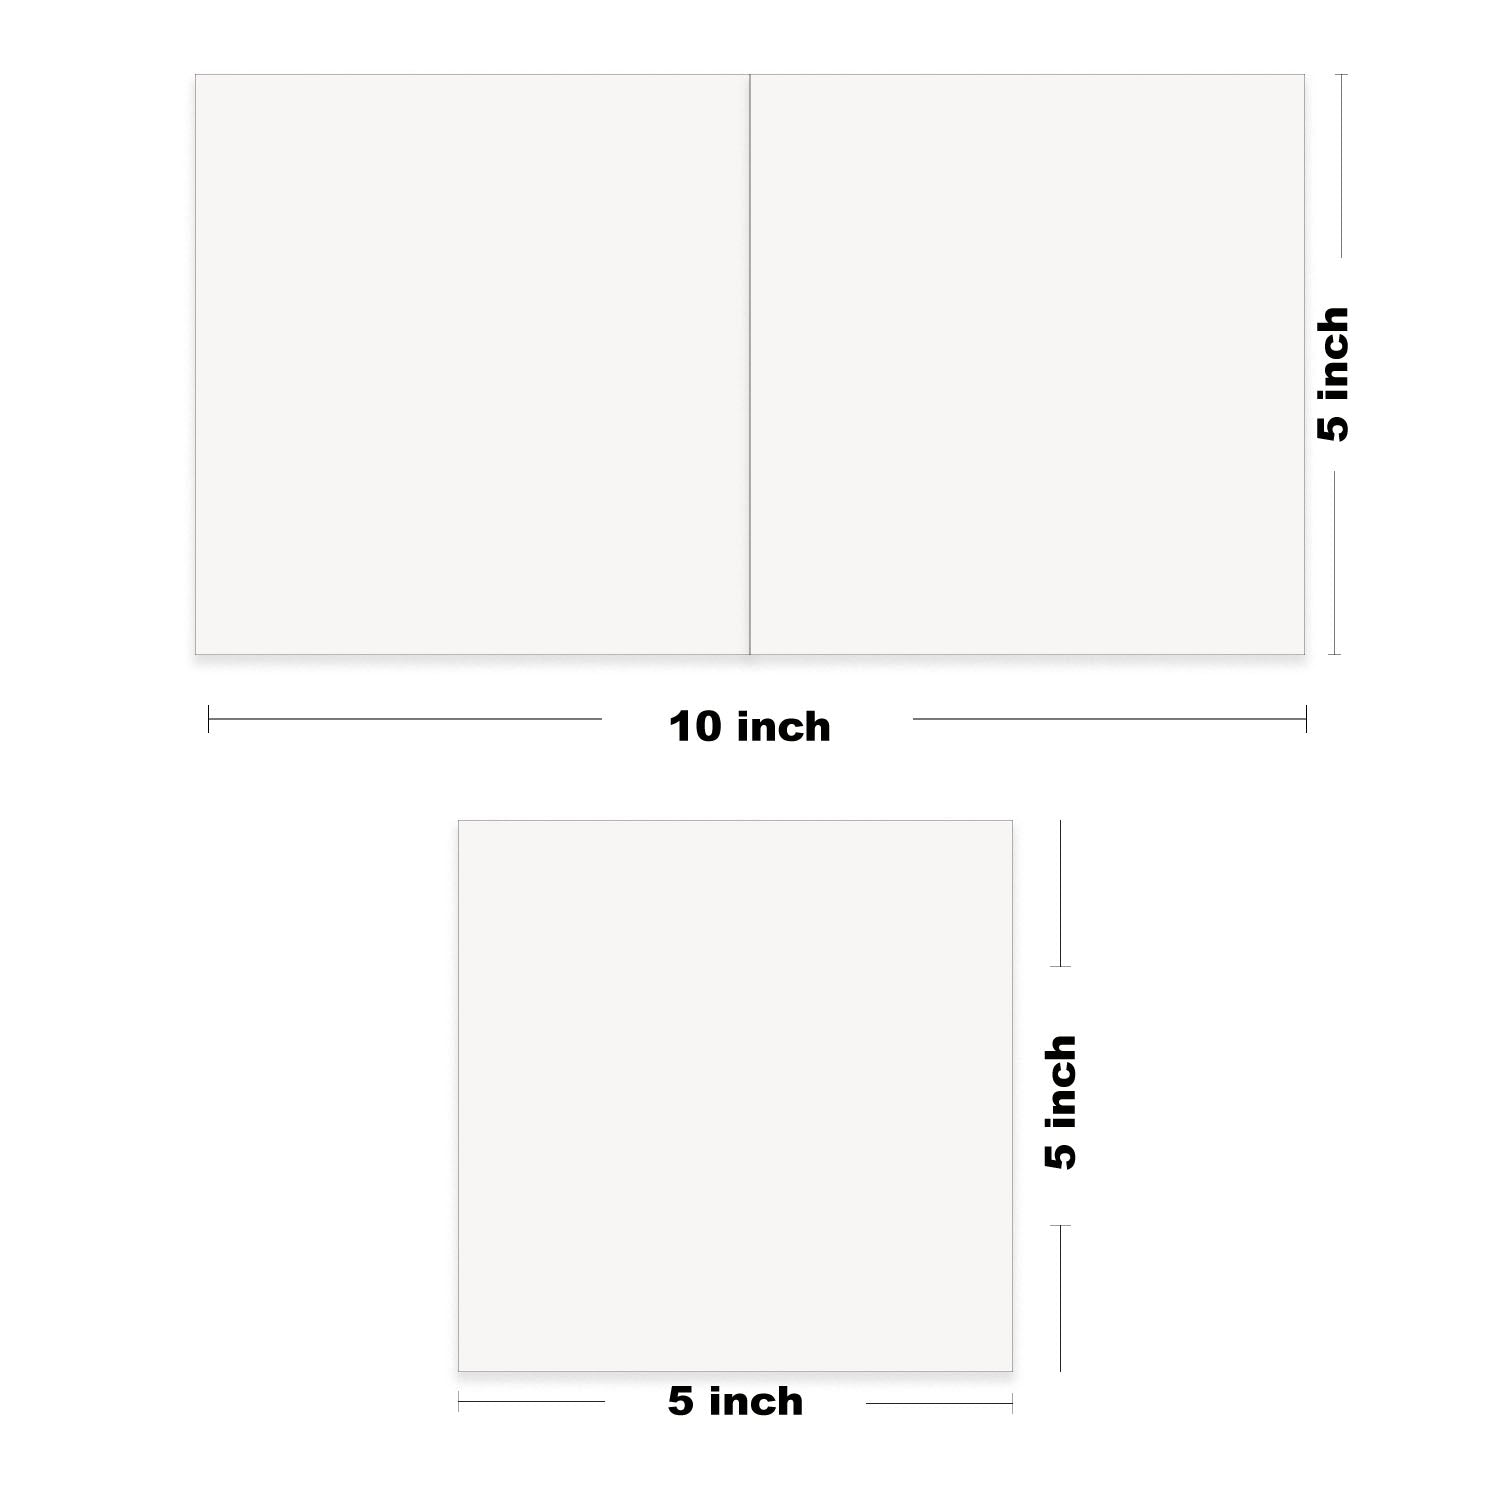 Basic WHITE Card Stock Paper - 11x17 - 100lb Cover (270gsm) - 100 PK